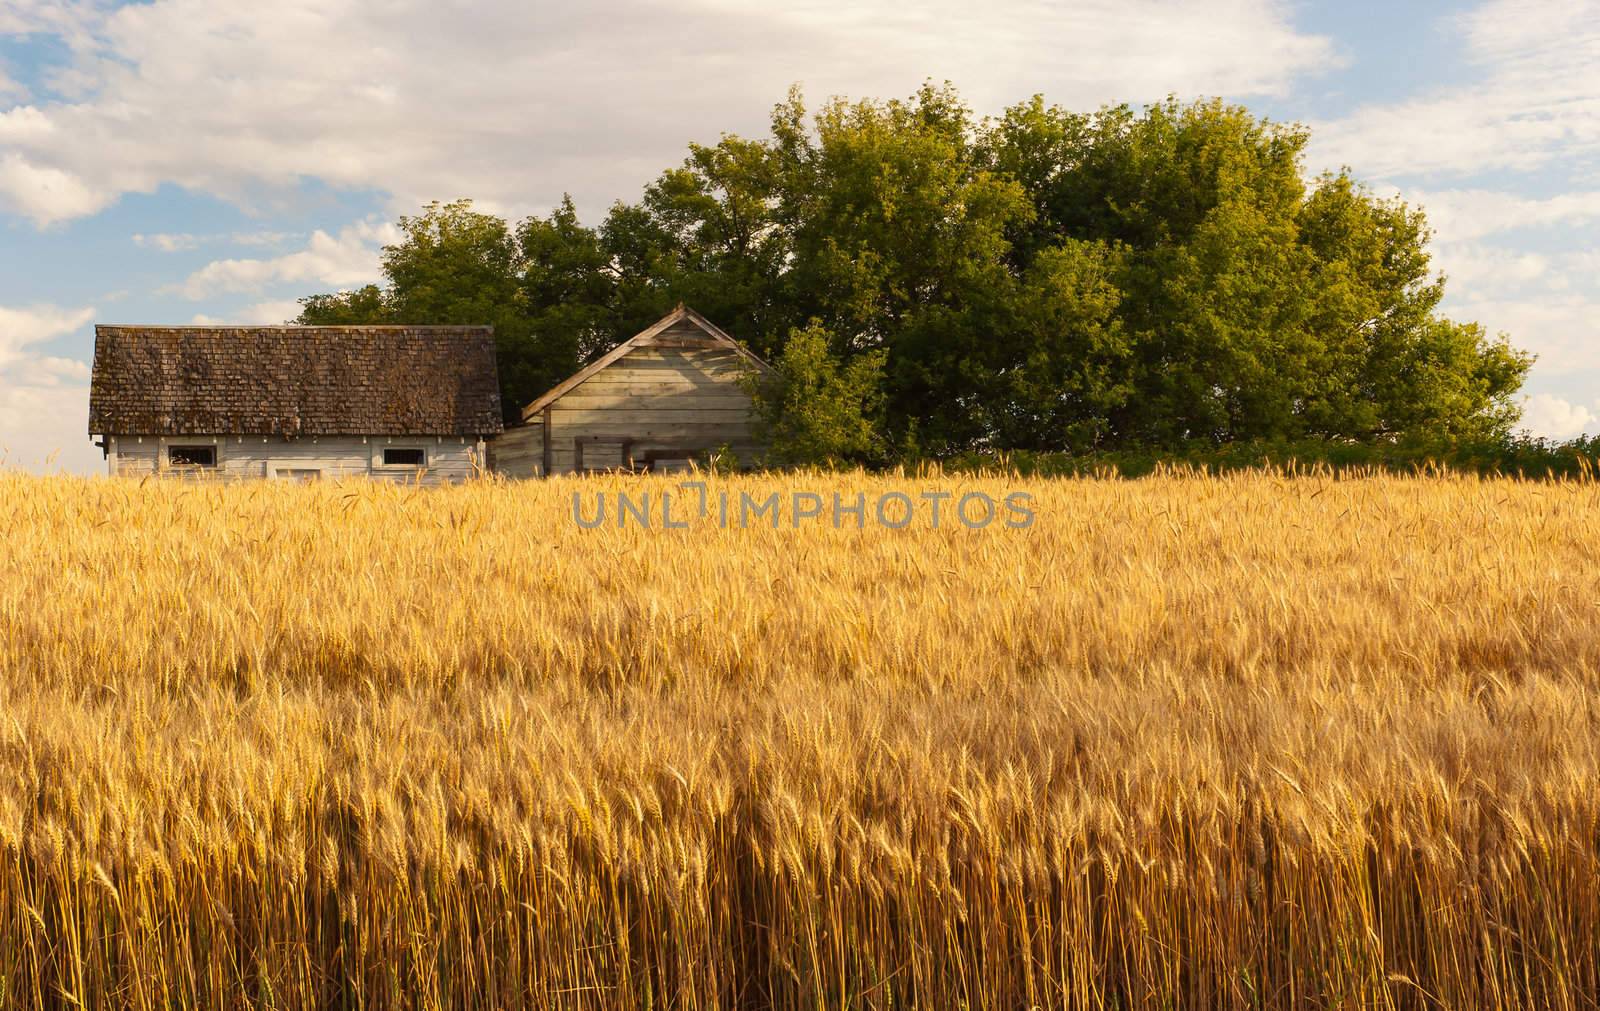 Abandoned sheds and wheat field, Whitman County, Washington, USA by CharlesBolin